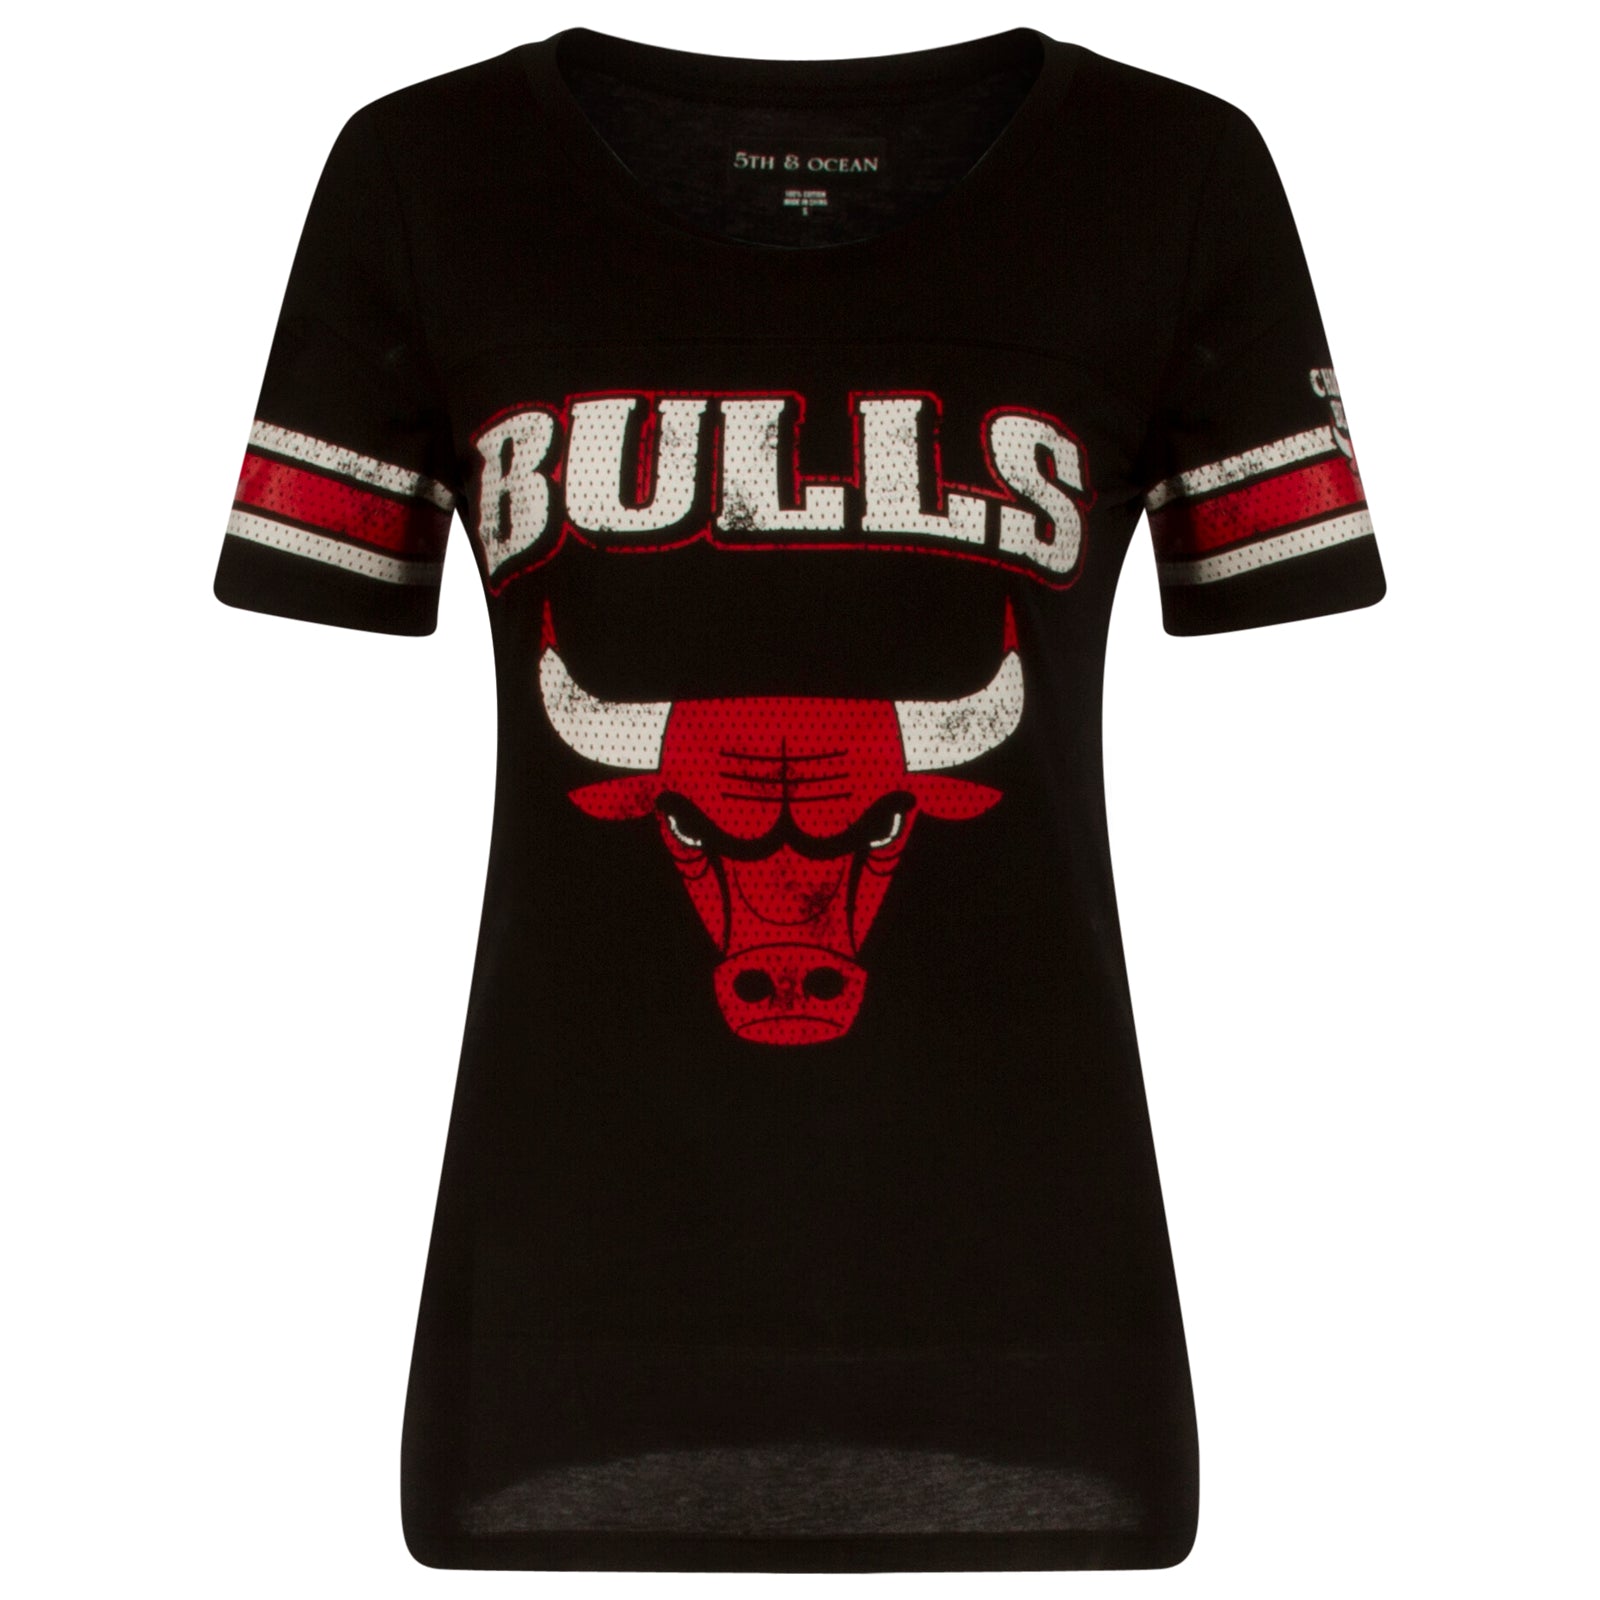 chicago bull jersey